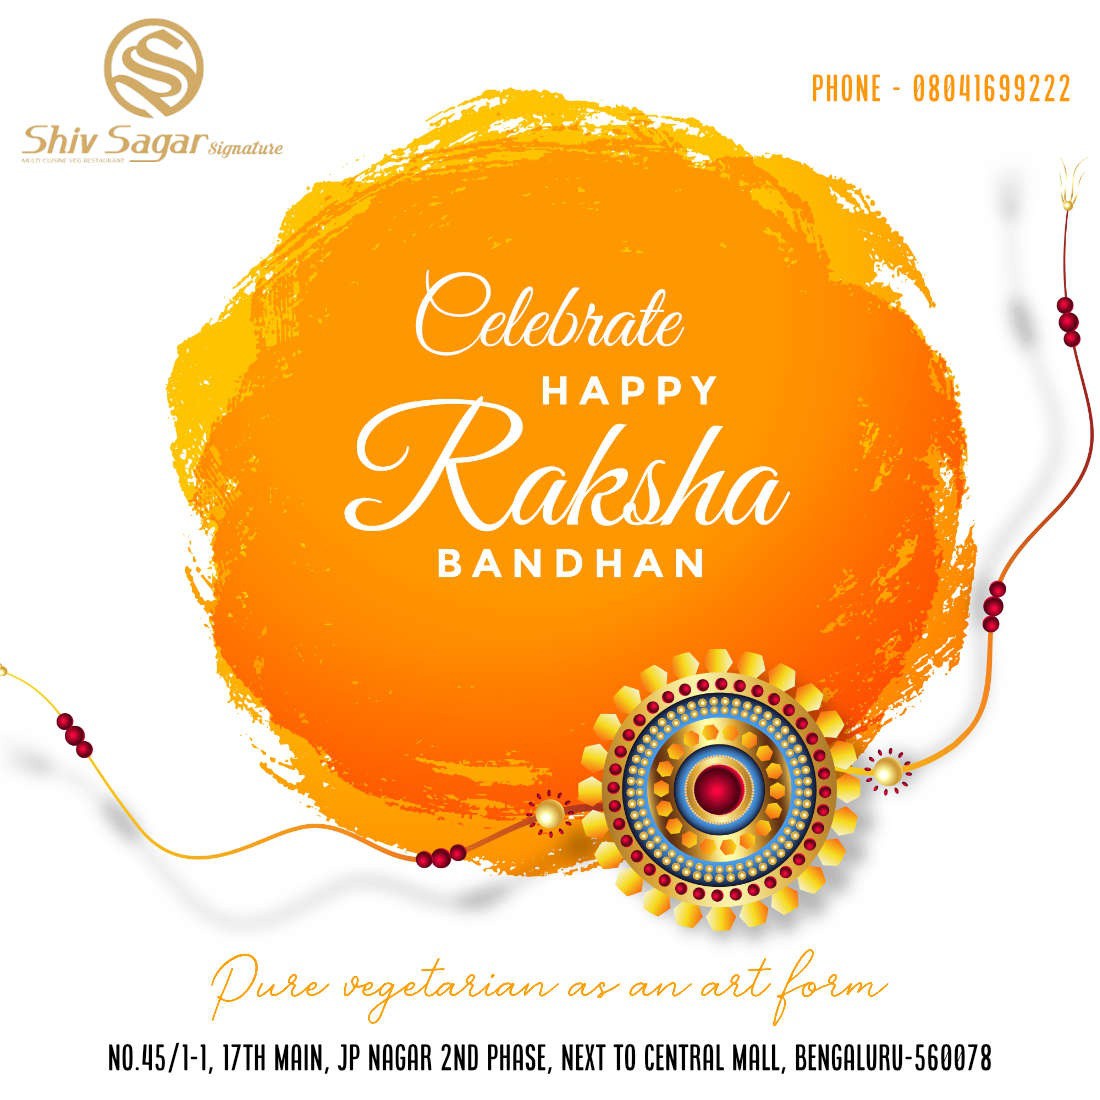 Social Media for Indian Festivals - Raksha Bandhan Rakhi Image 7